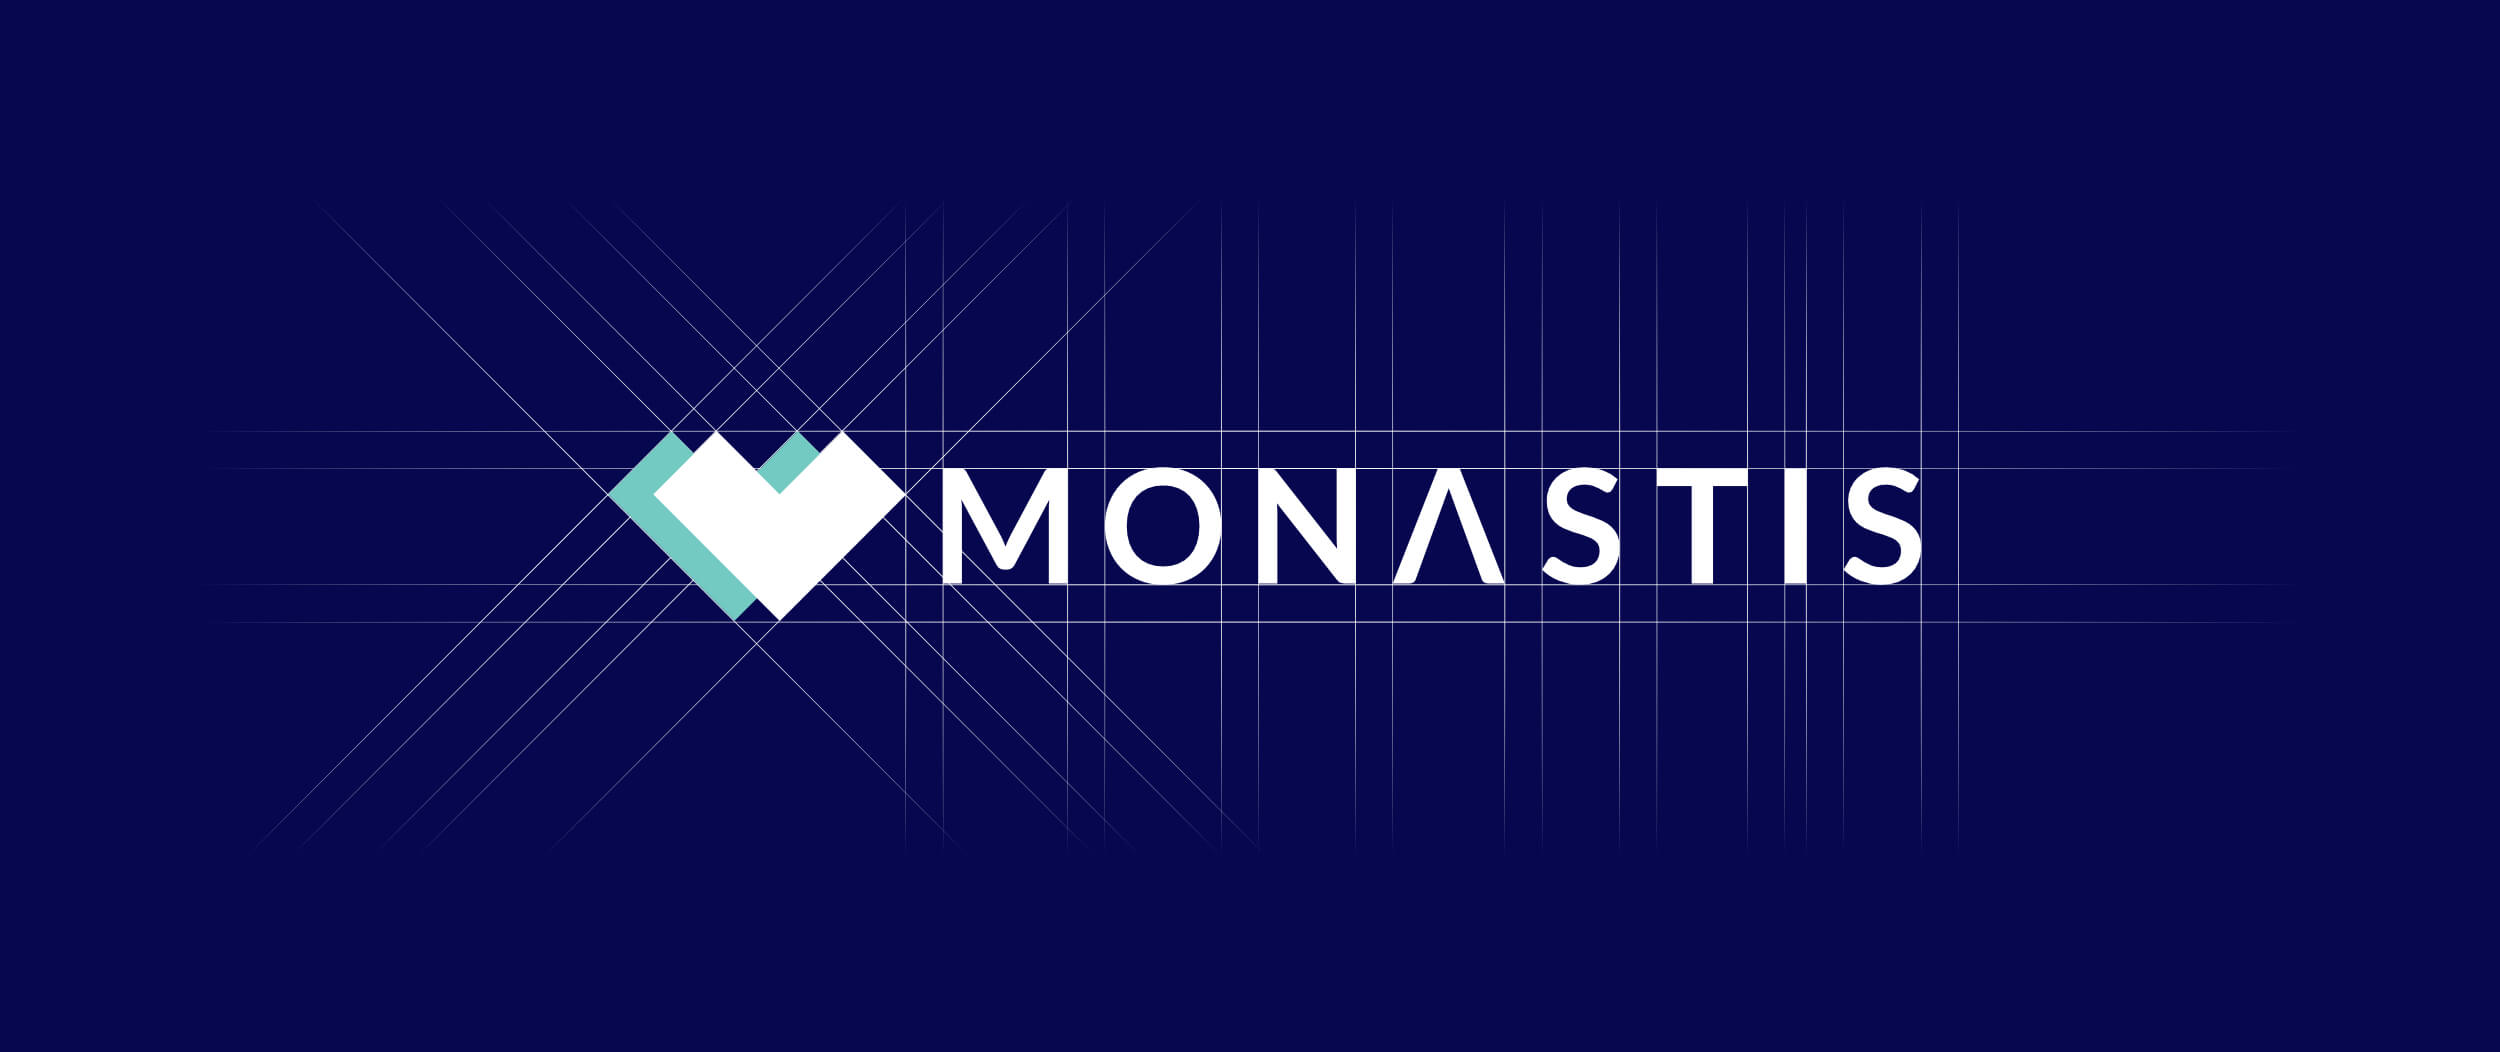 monastis logo grid design by michael maleek djibril